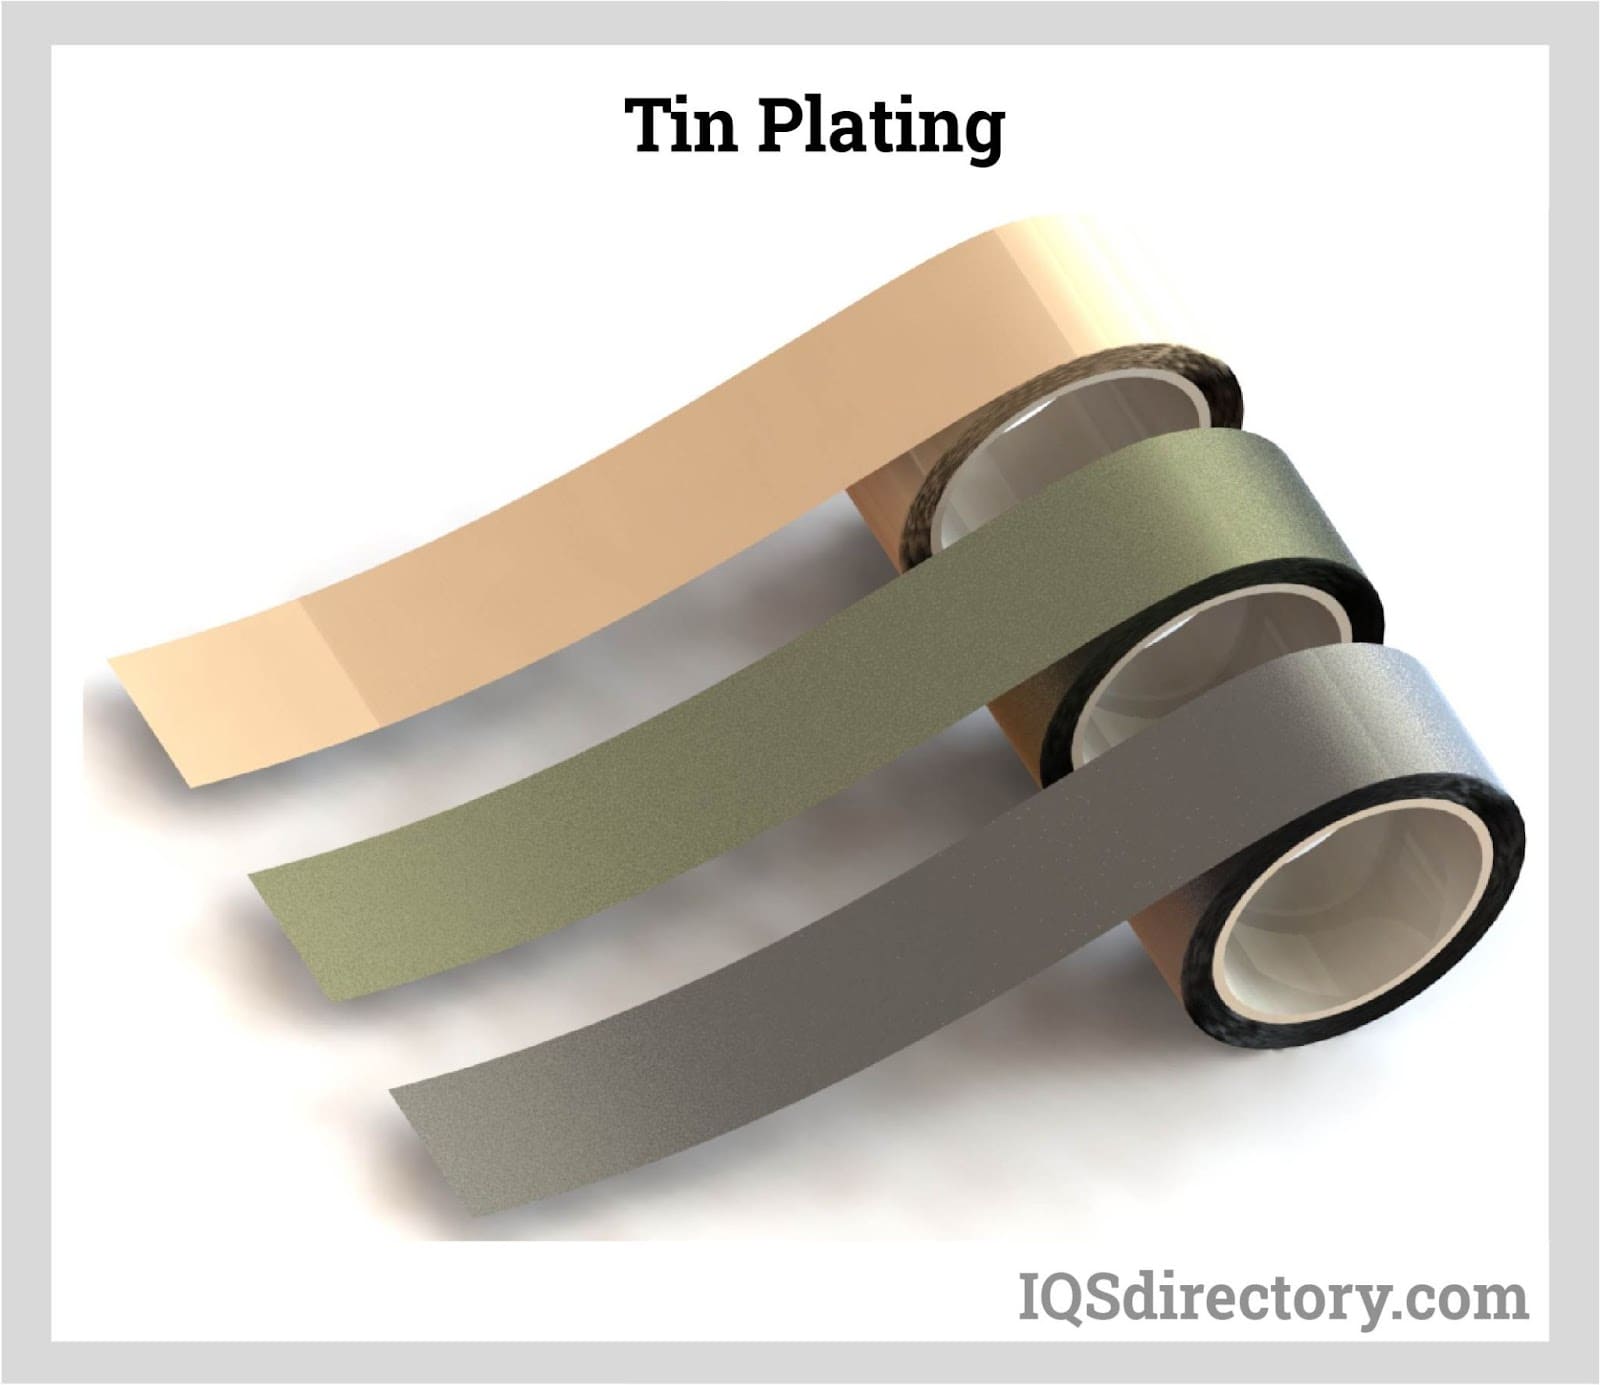 Tin Plating